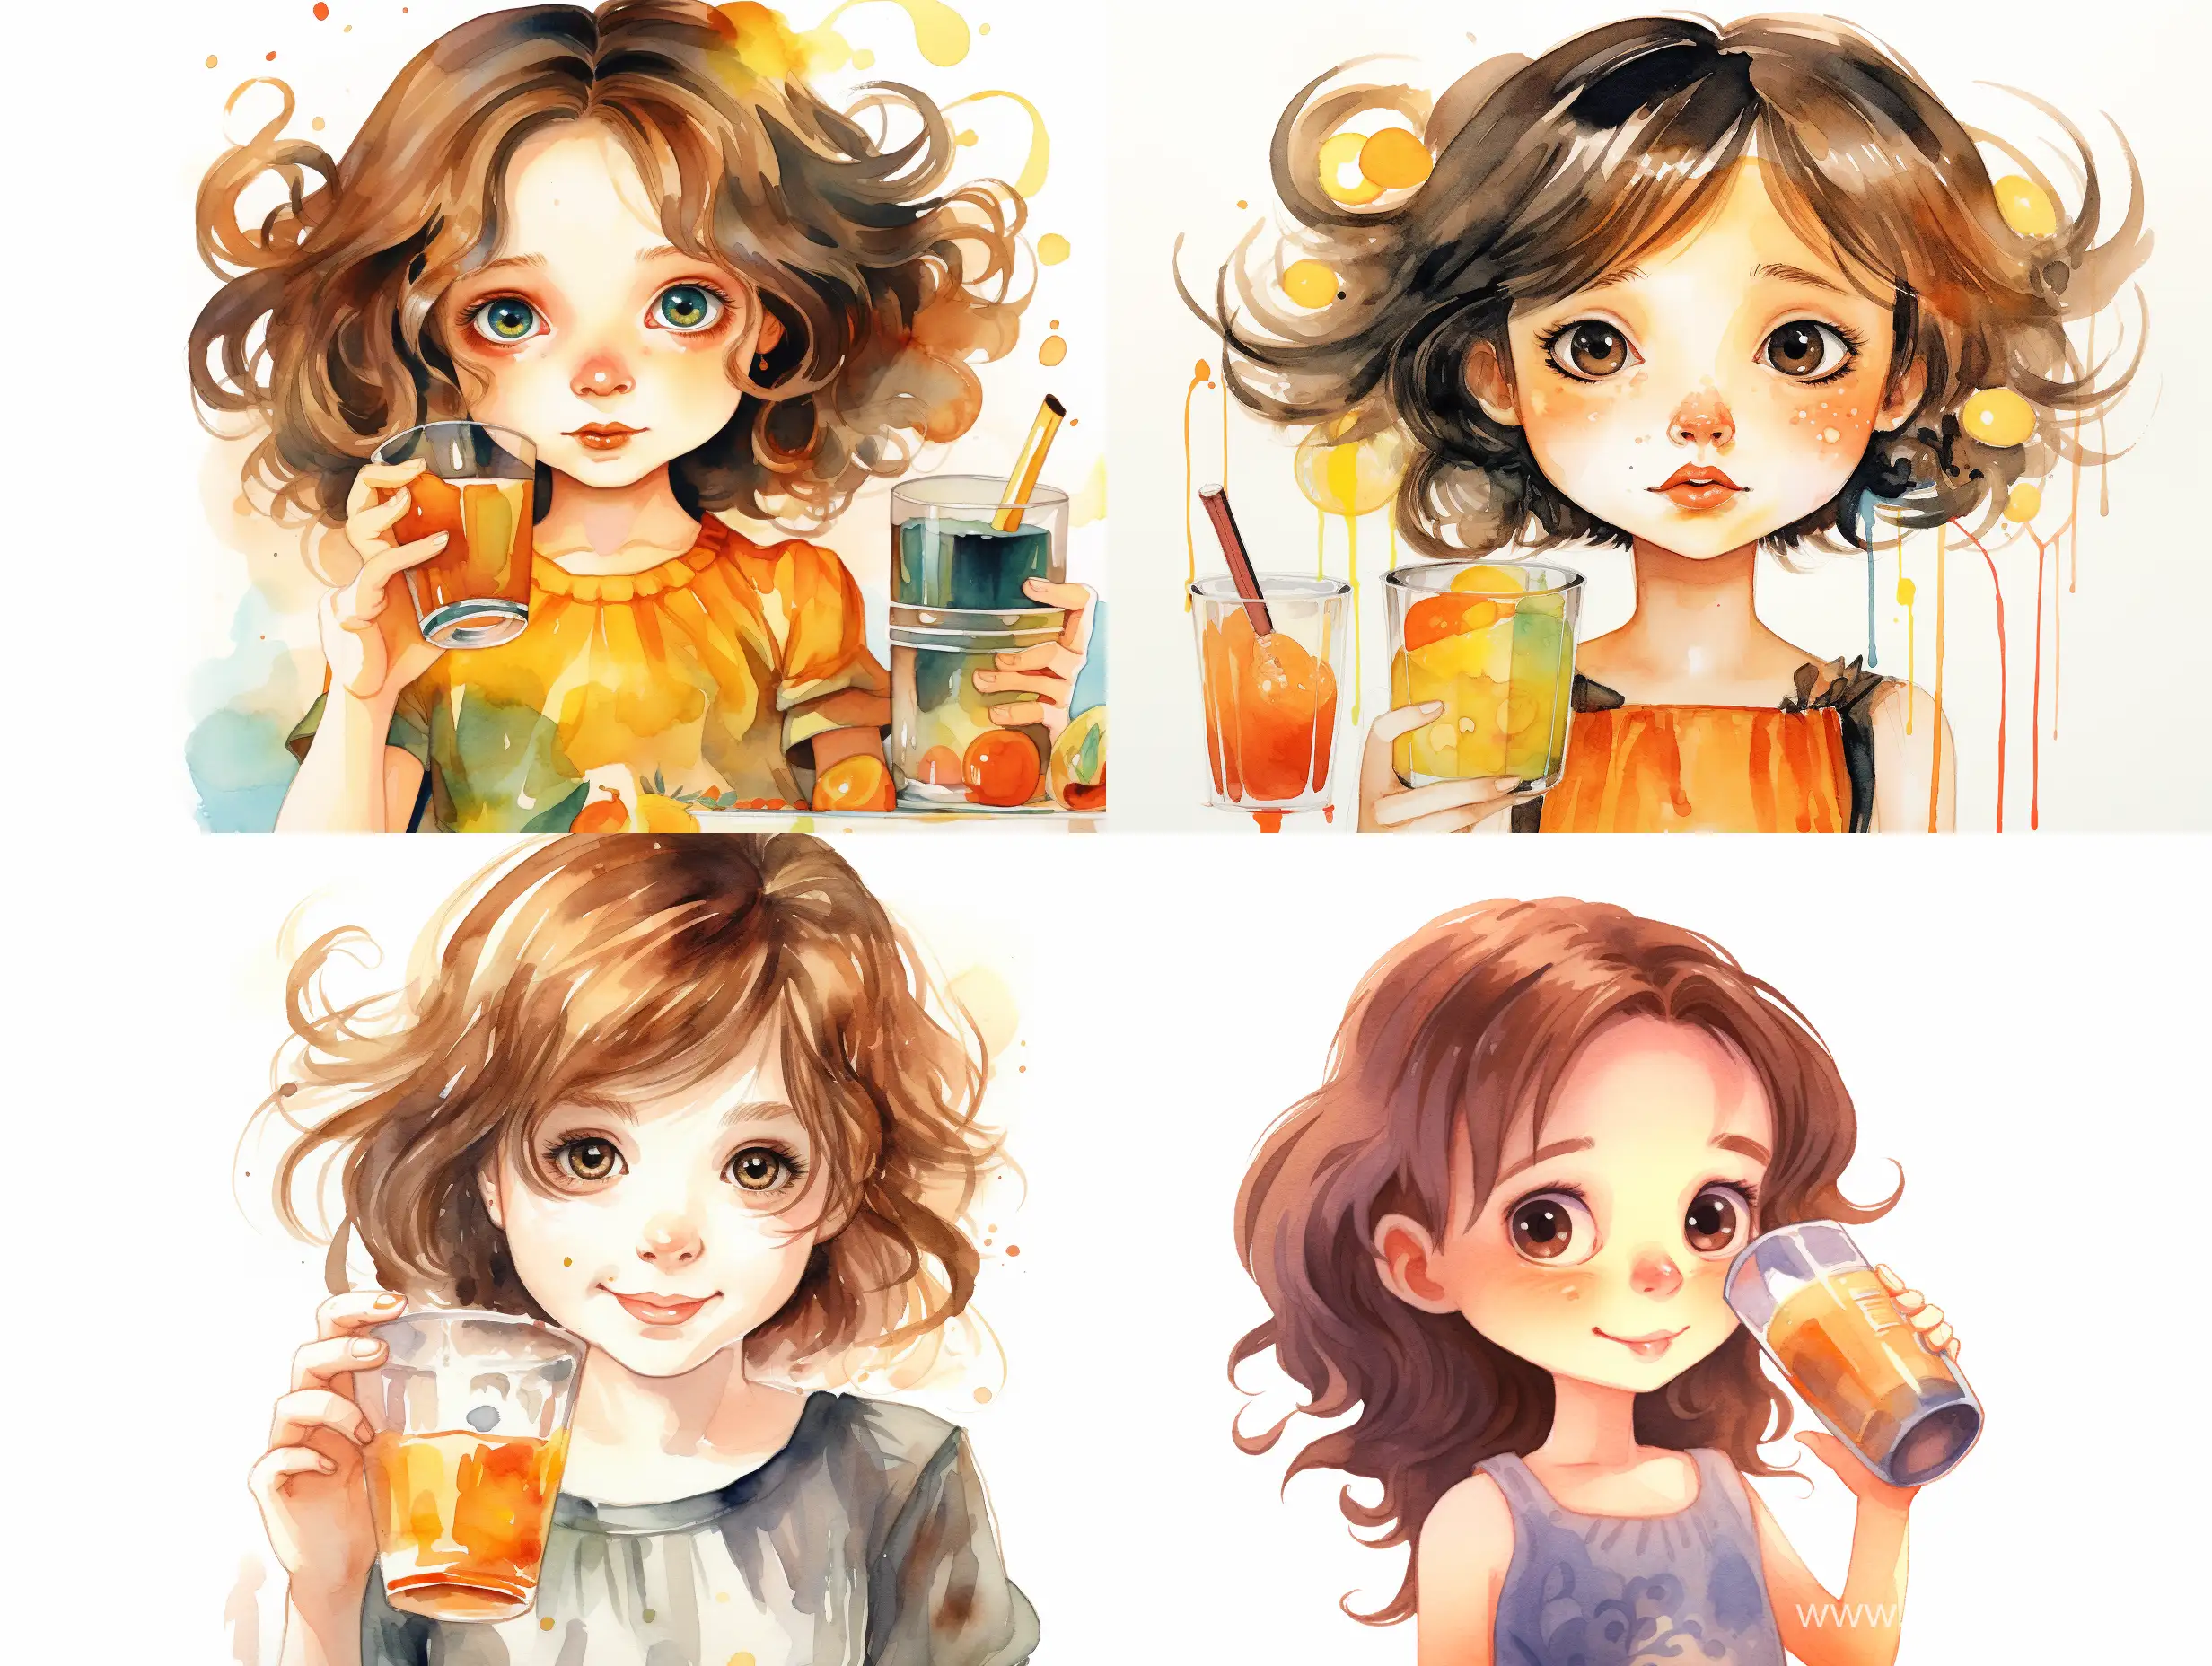 Adorable-Toddler-Enjoying-Orange-Juice-Whimsical-Illustration-in-Victor-Ngai-Style